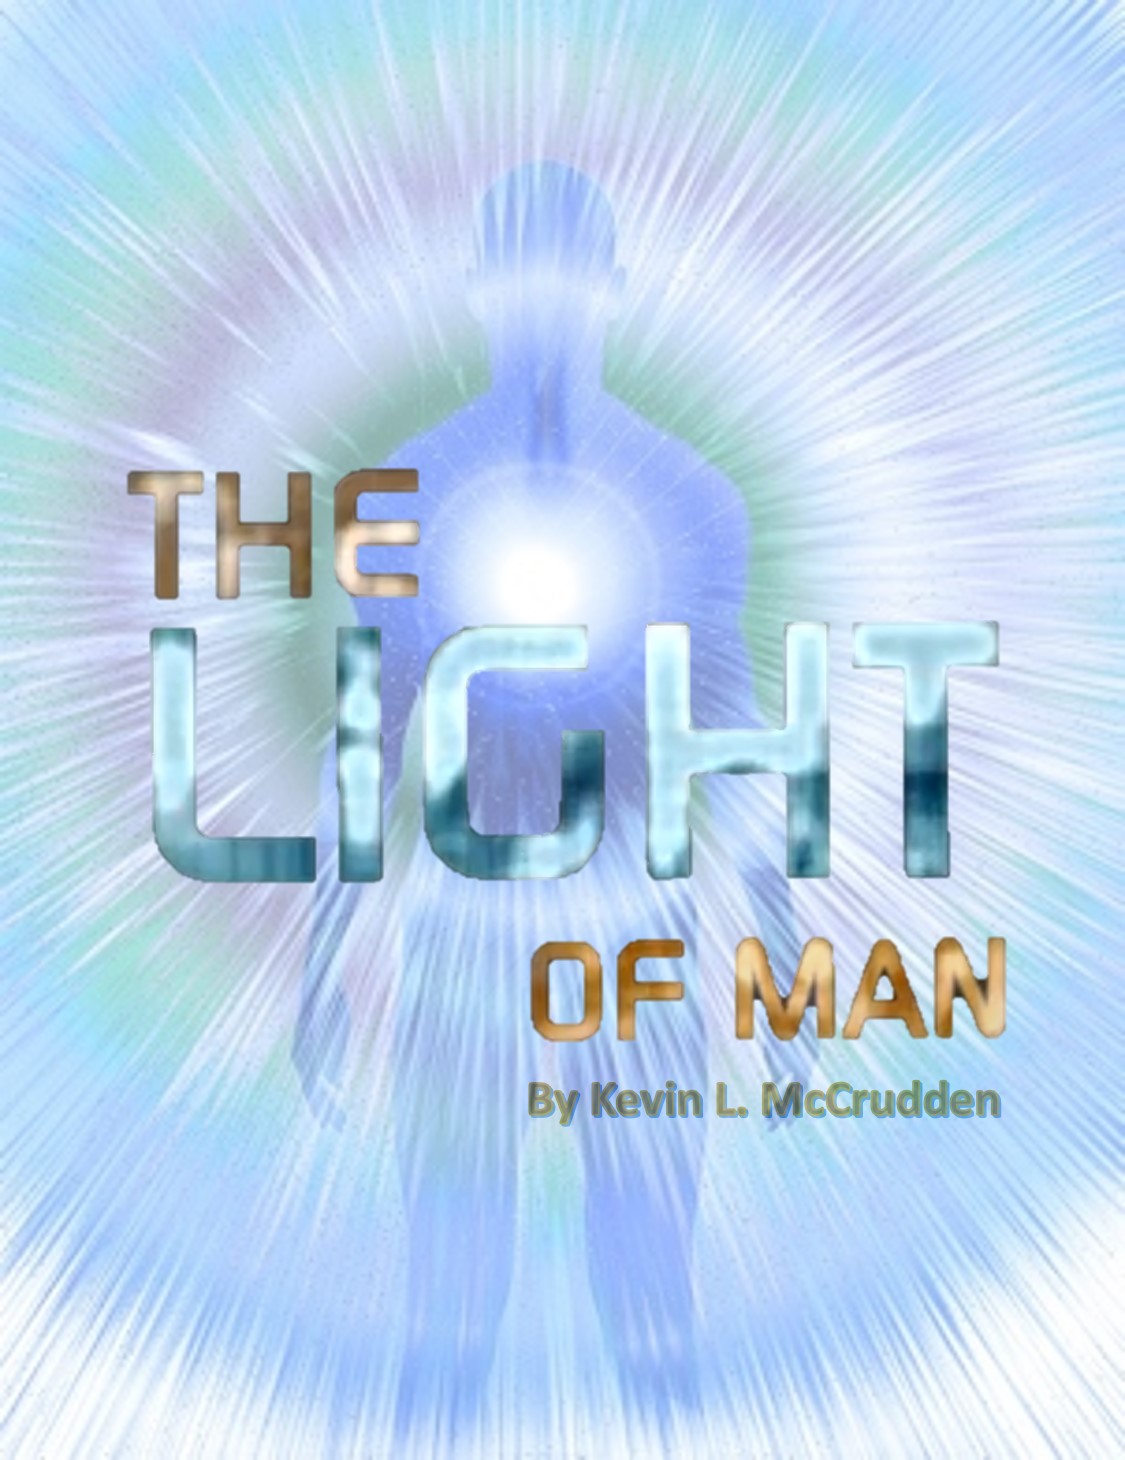 Kevin L. McCrudden's - The Light Of Man